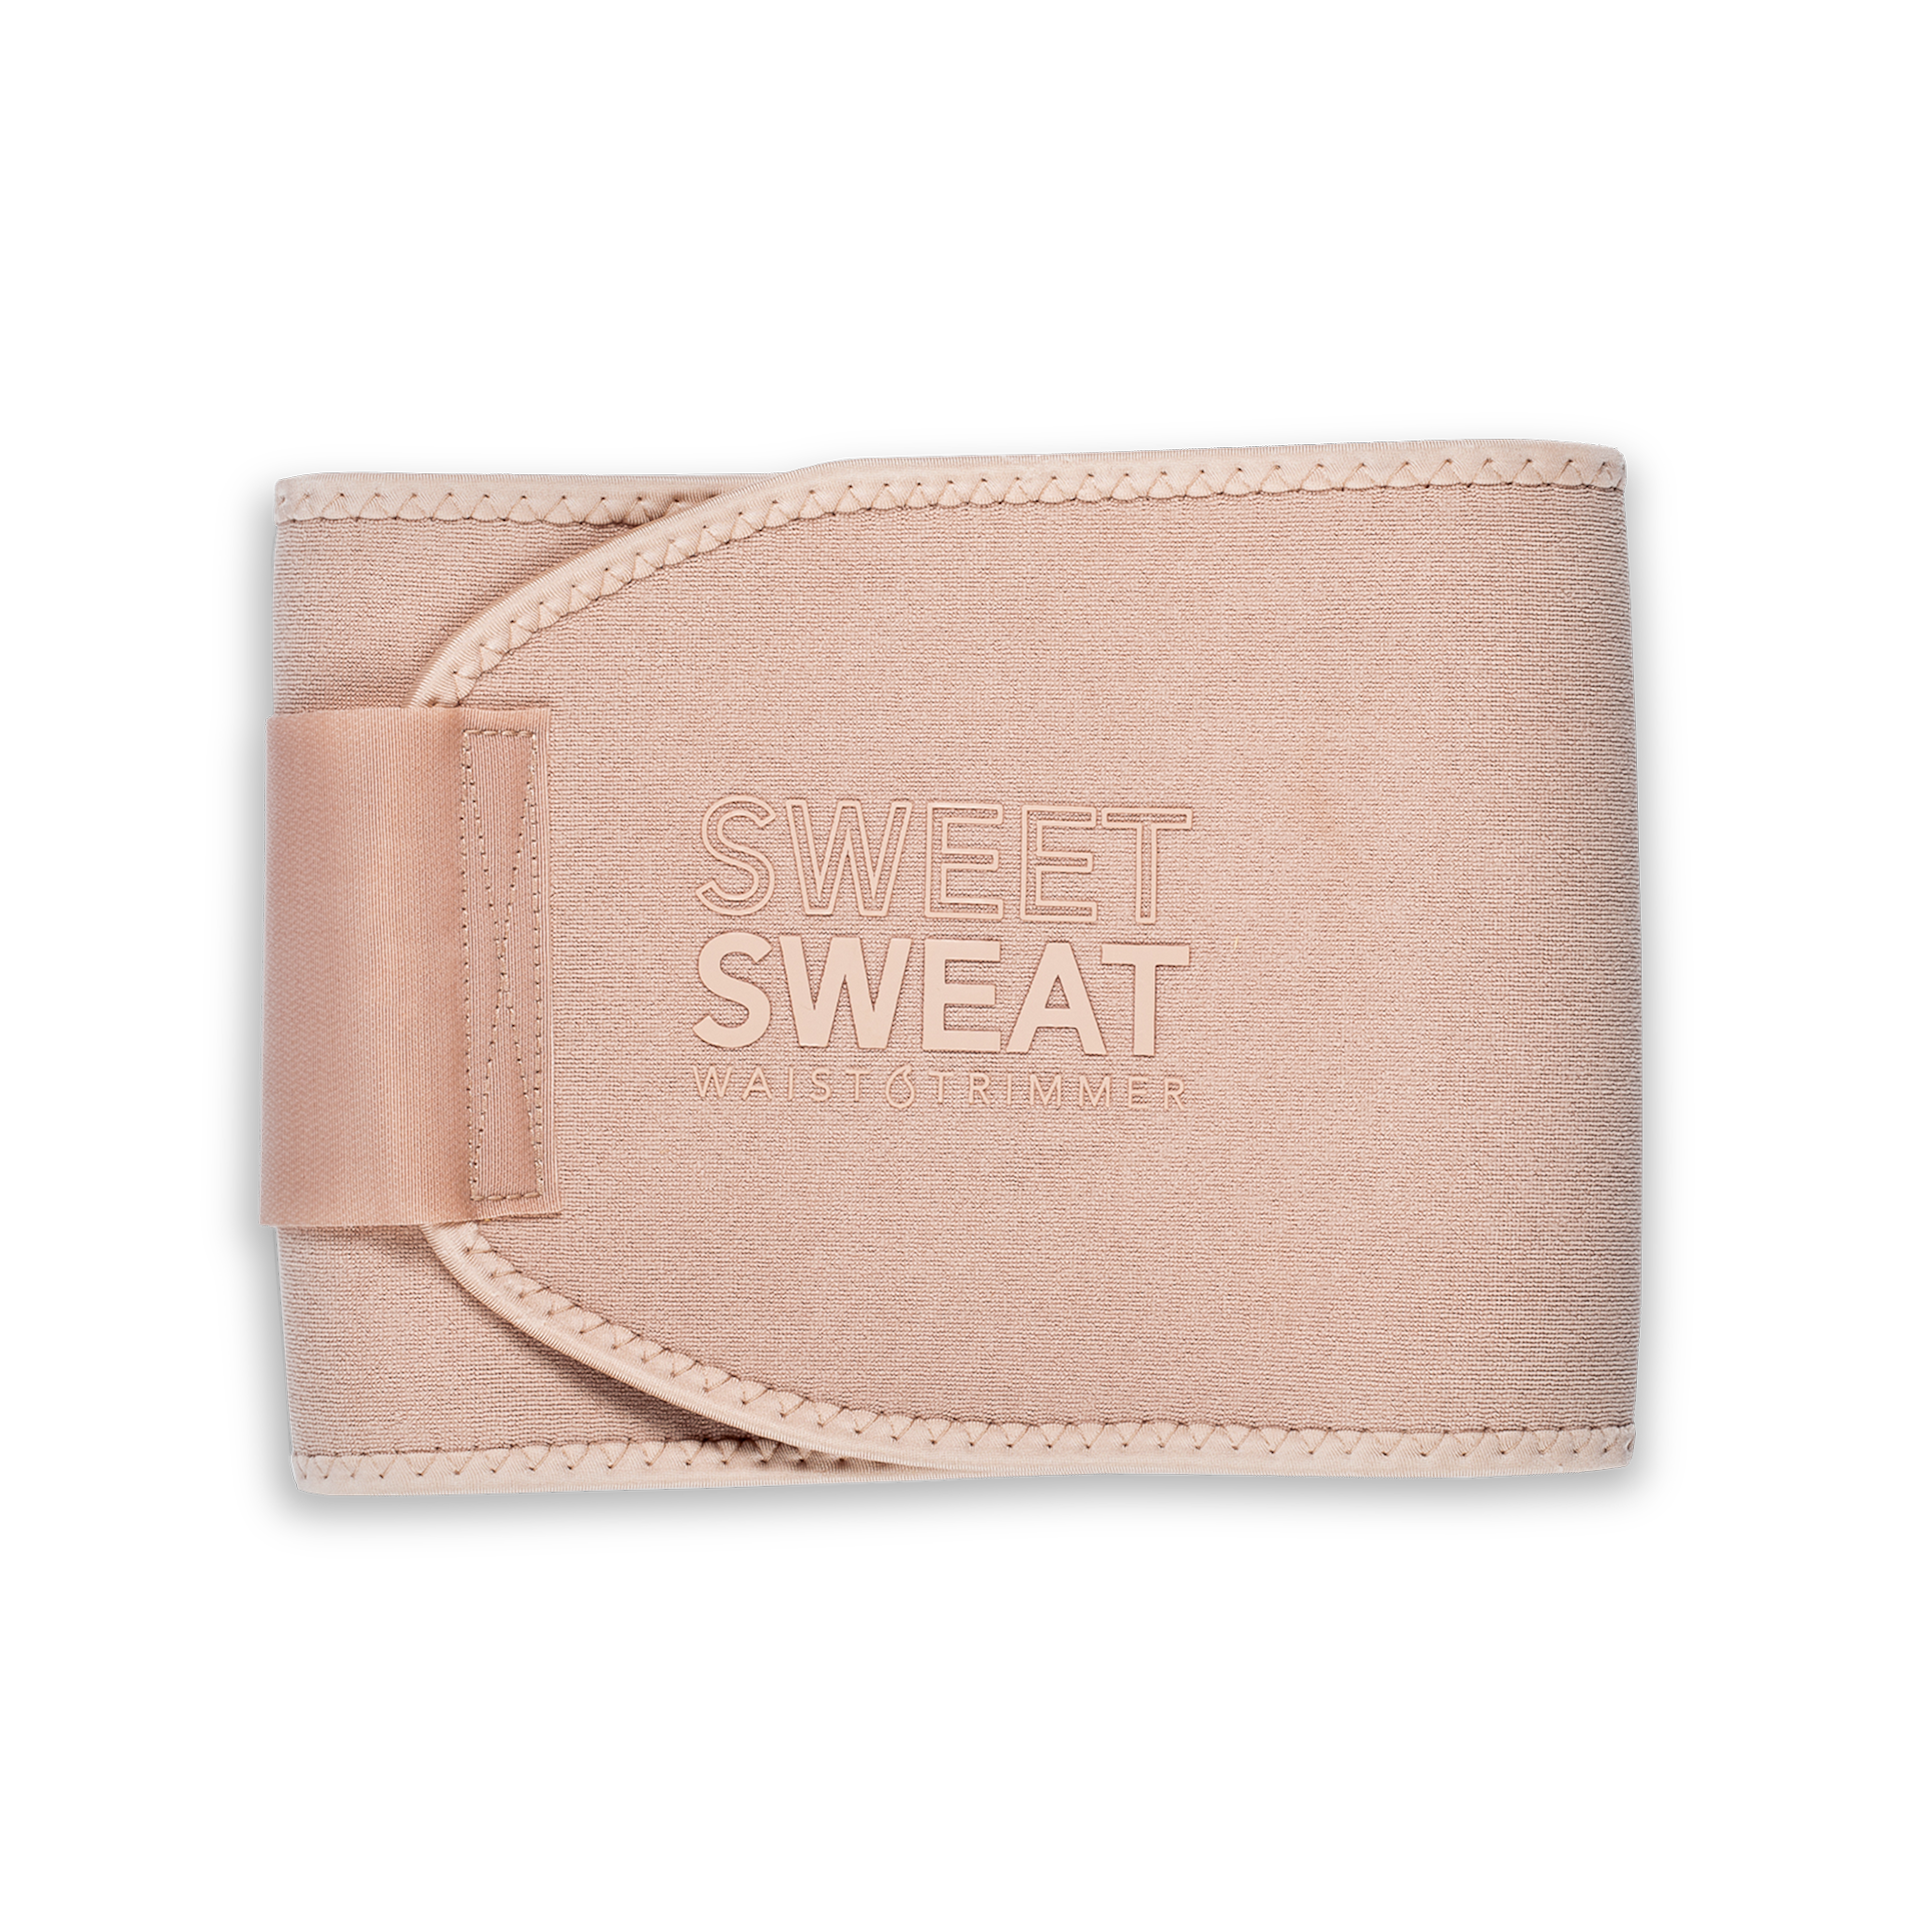 Buy flatmop Sweet Sweat Waist Trimmer for Women and Men - Sweat